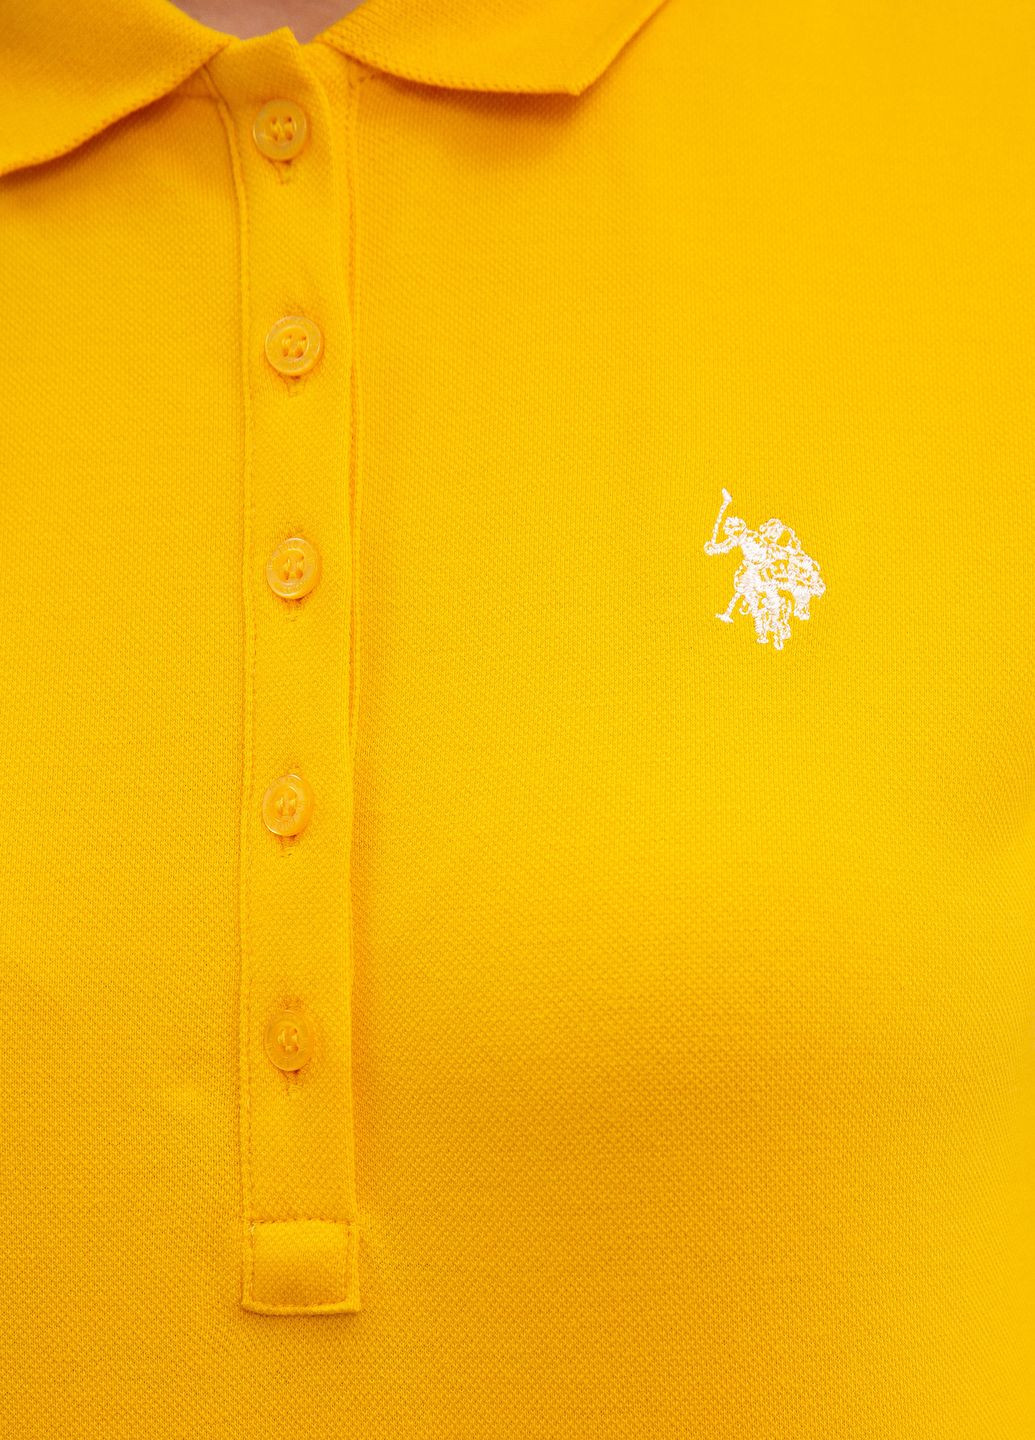 Светло-желтая футболка u.s/ polo assn. женская U.S. Polo Assn.